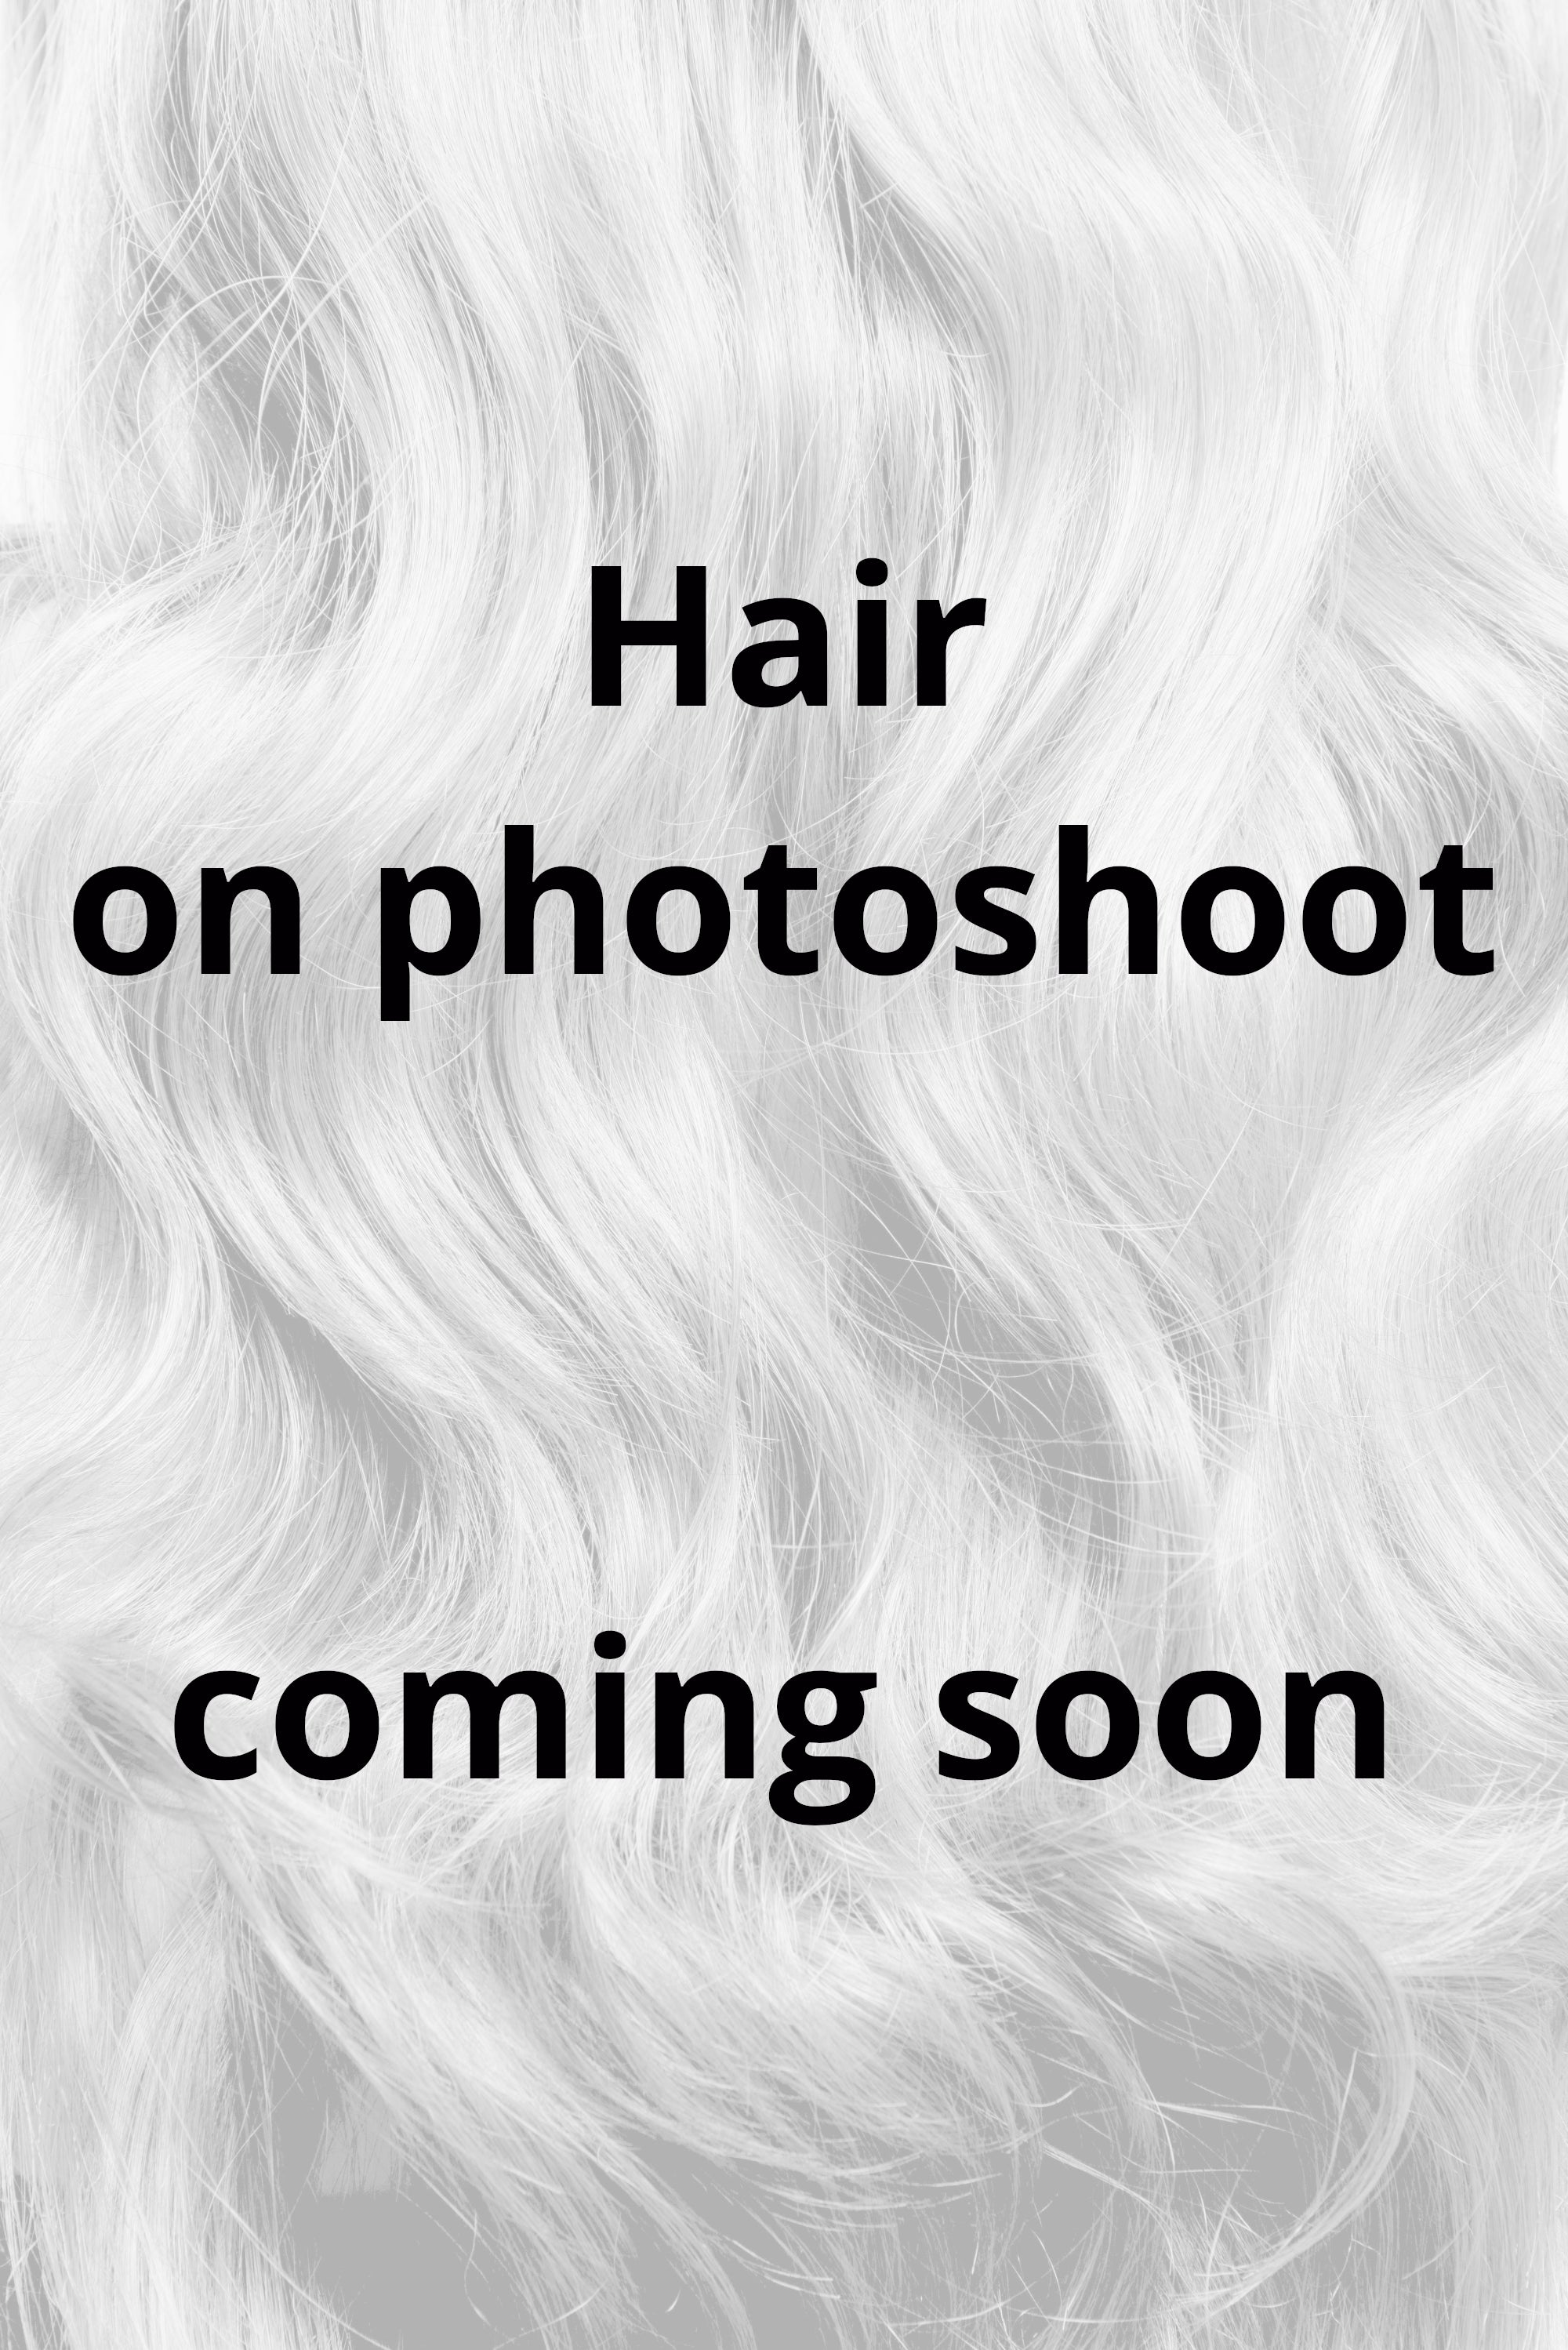 Behair professional Bulk hair "Premium" 26" (65cm) Natural Wave Platinum Blond #60 - 25g hair extensions